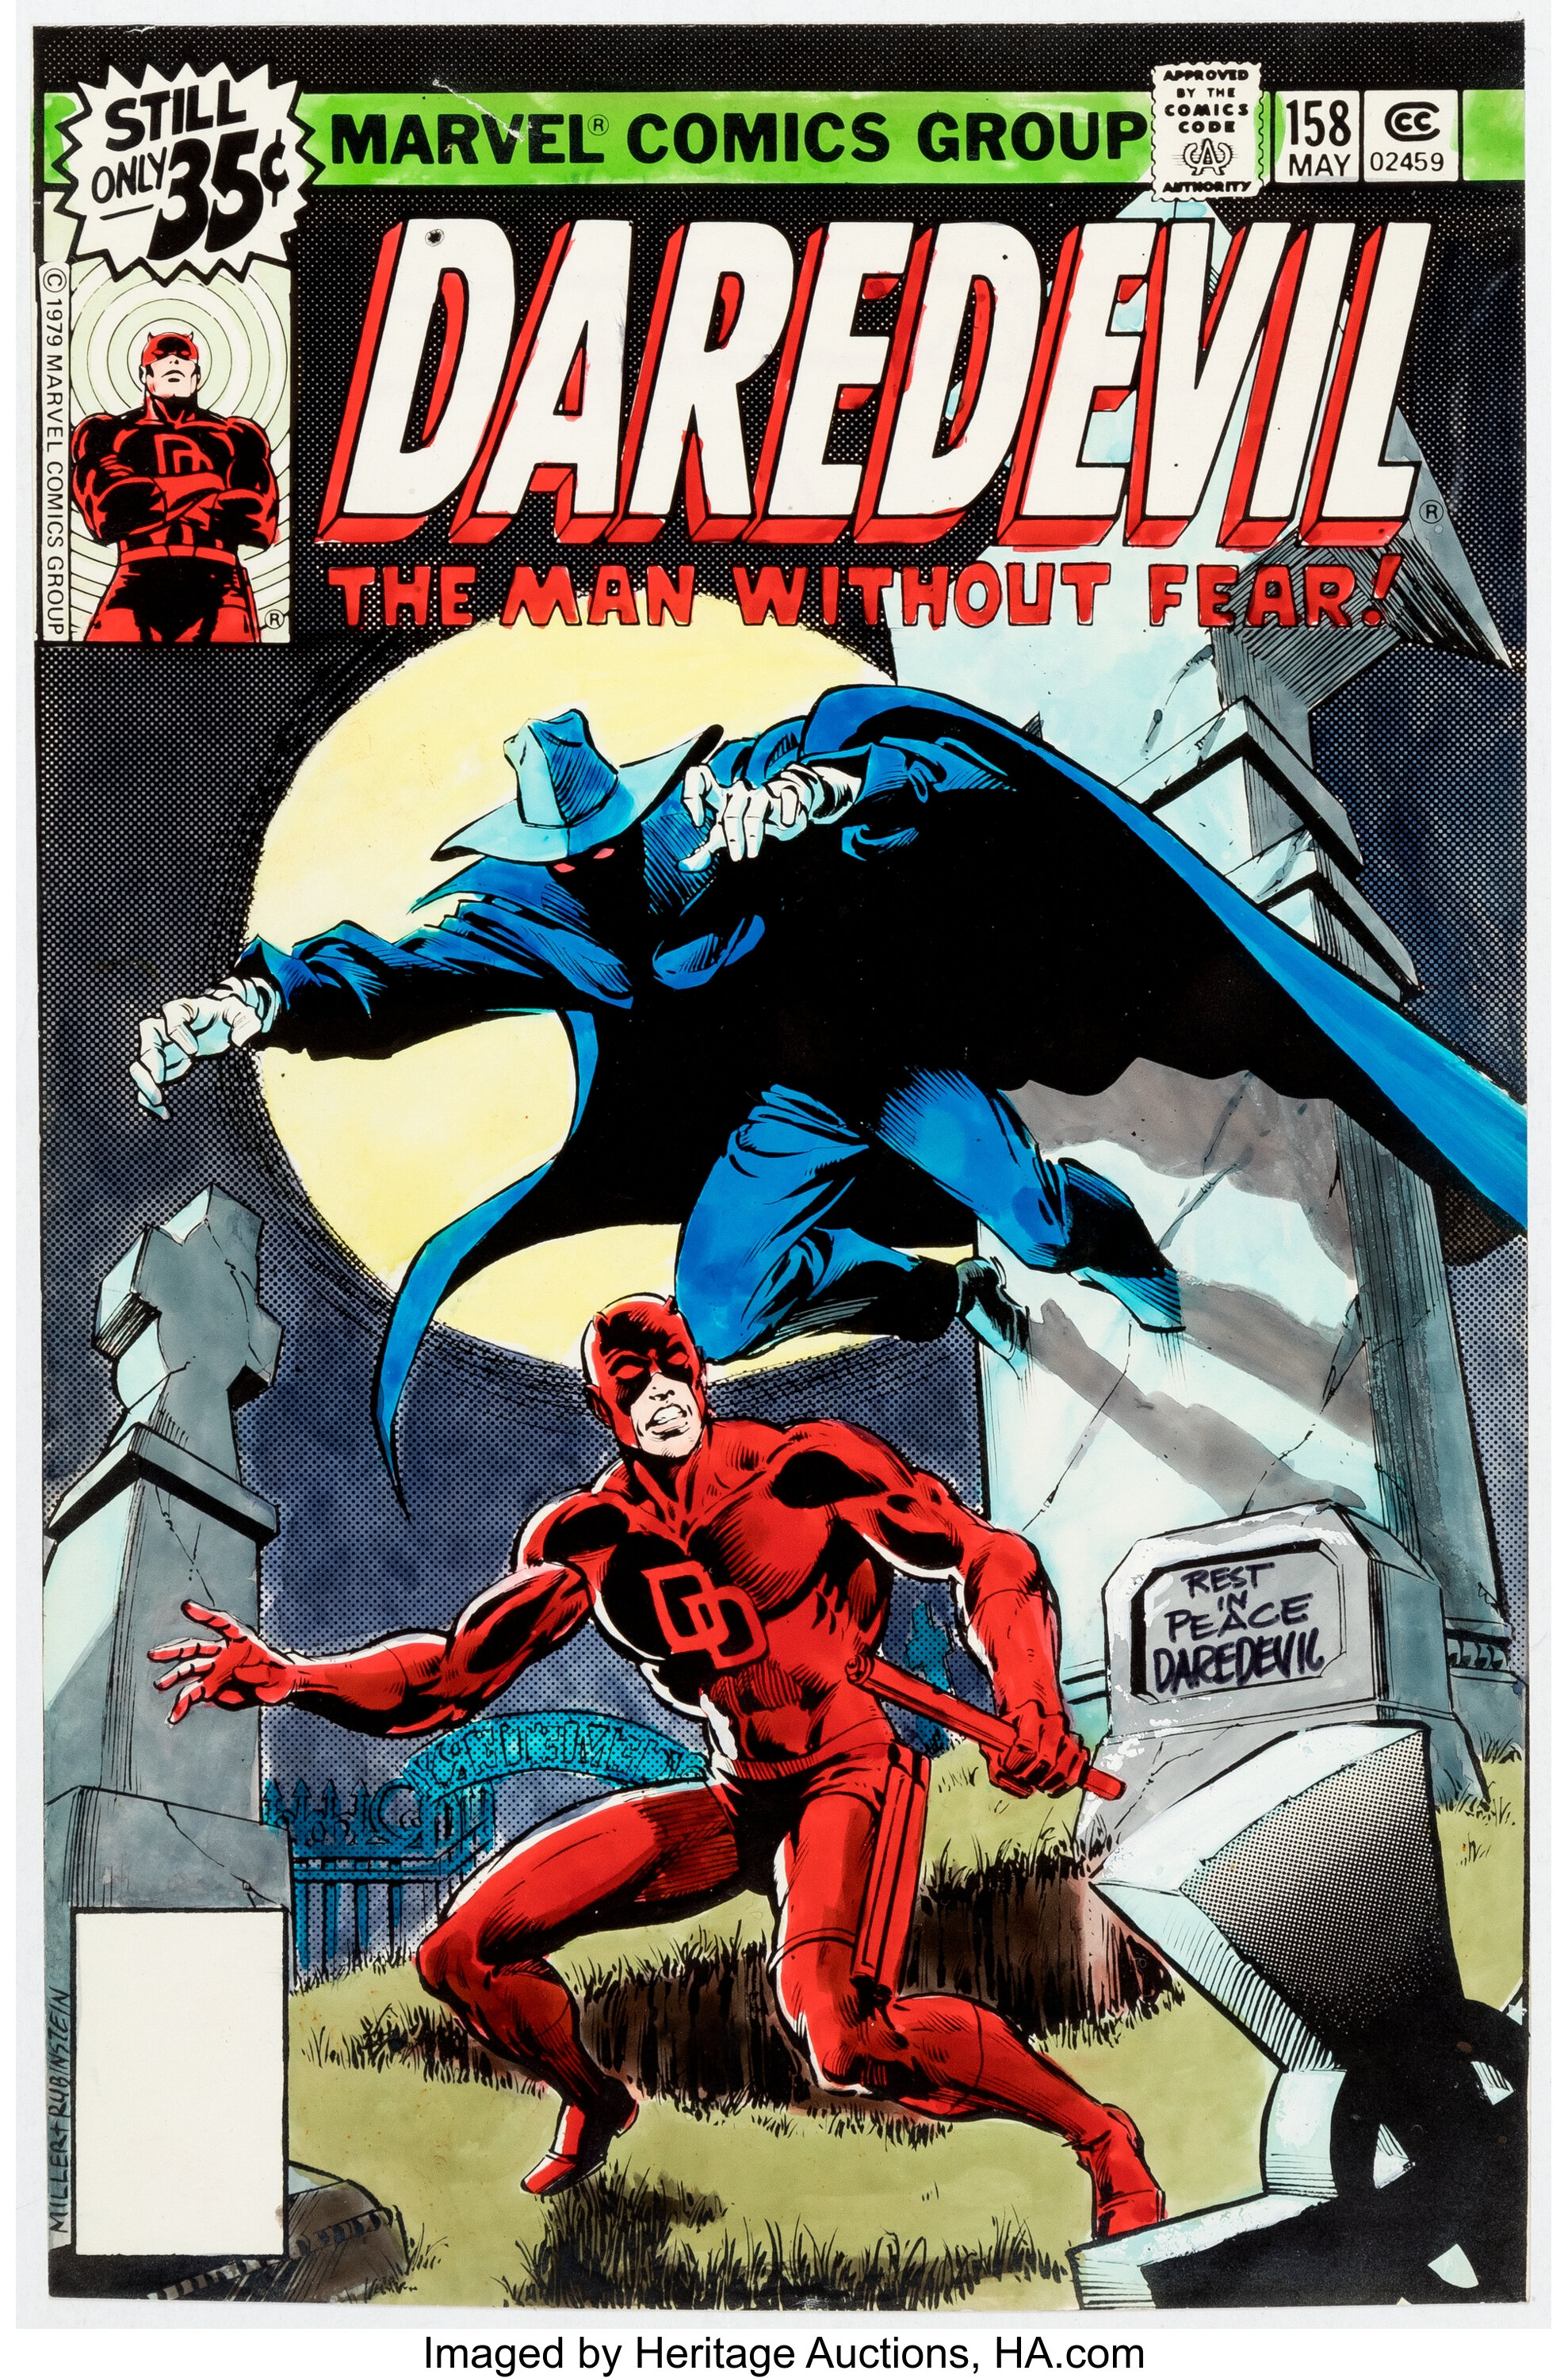 Marvel Artist Daredevil 158 Cover Color Guide Marvel Comics Lot 